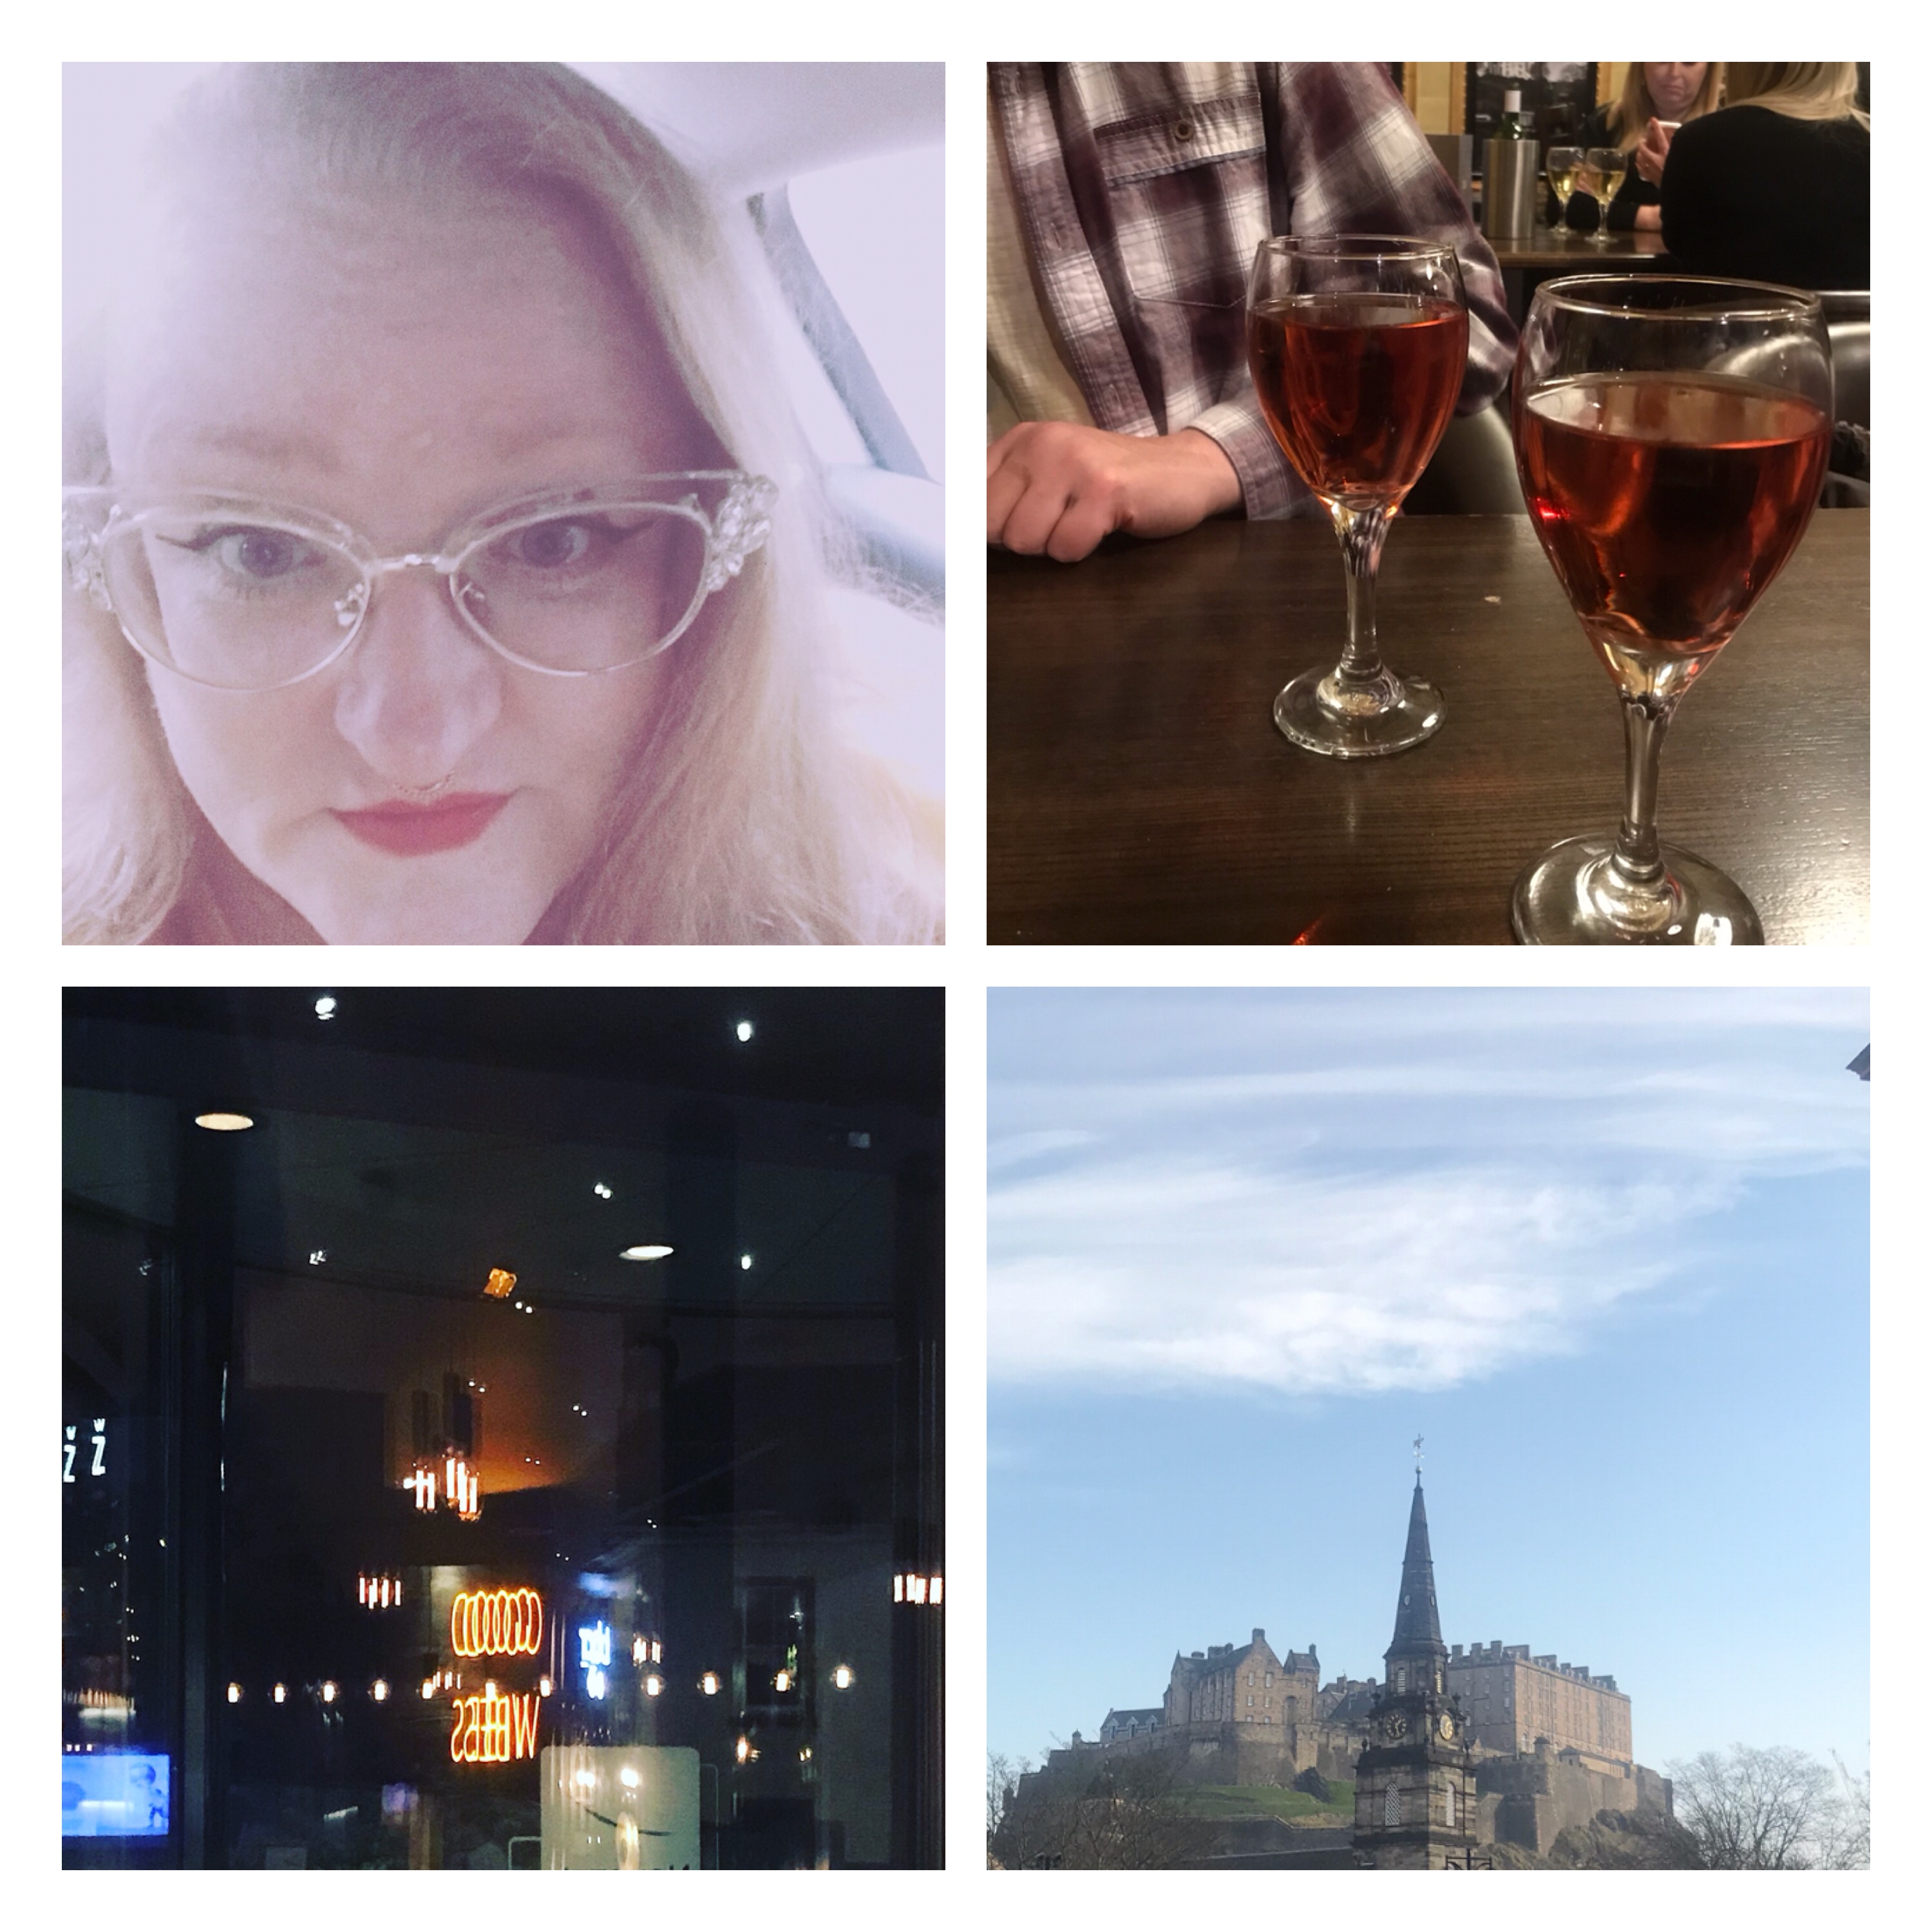 ly h kerr, rose wine, Edinburgh castle, neon lights 